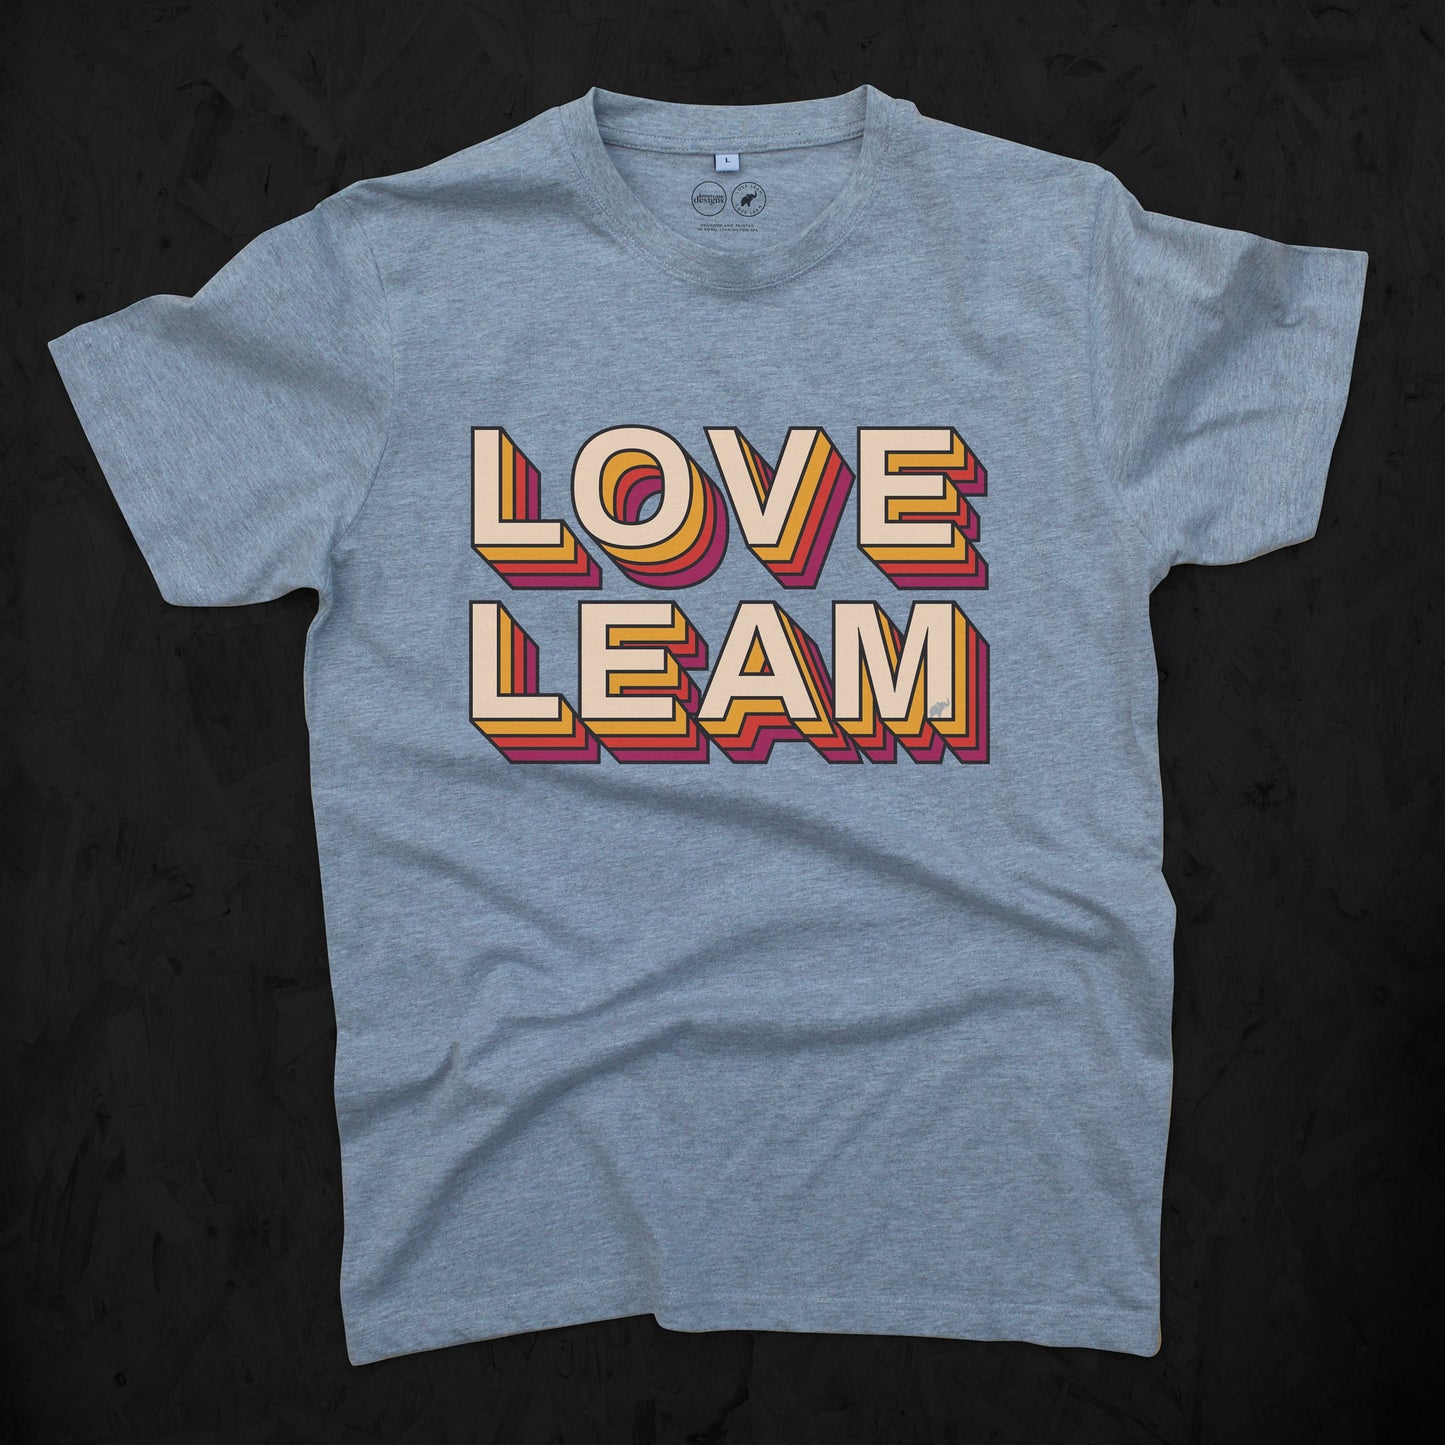 Love Leam 2 Tee